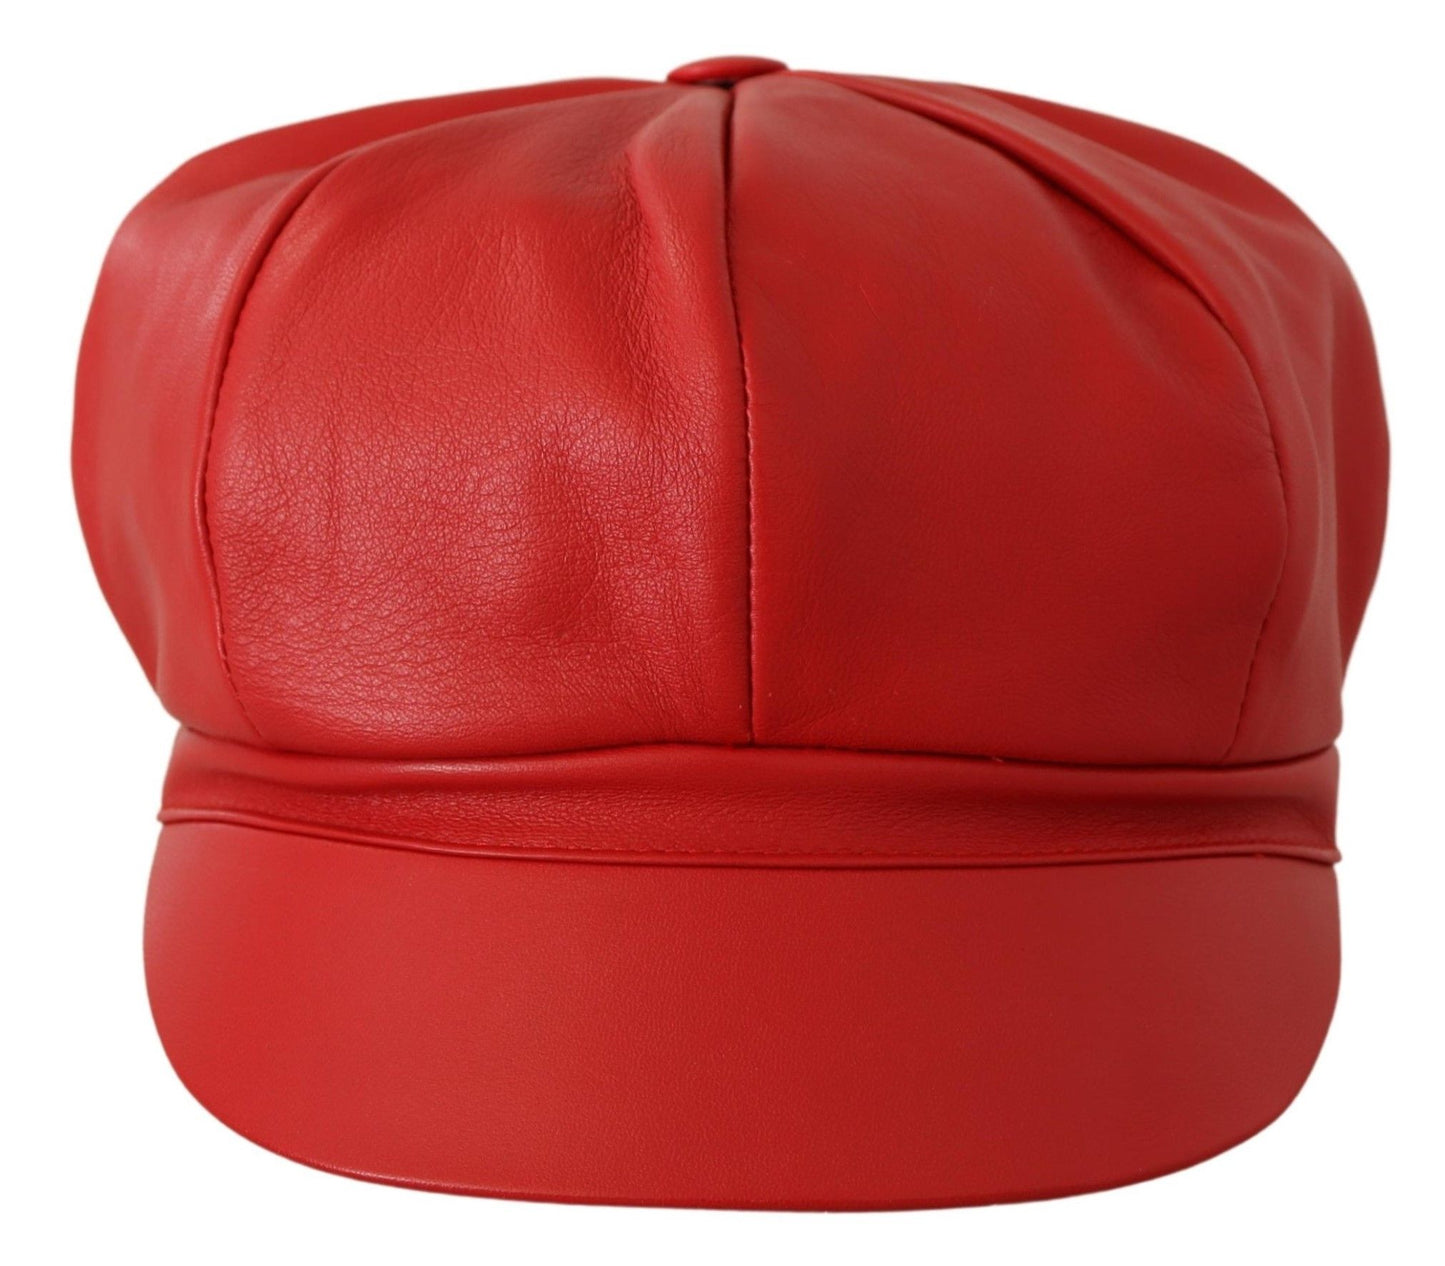 Chic Red Leather Cabbie Cap